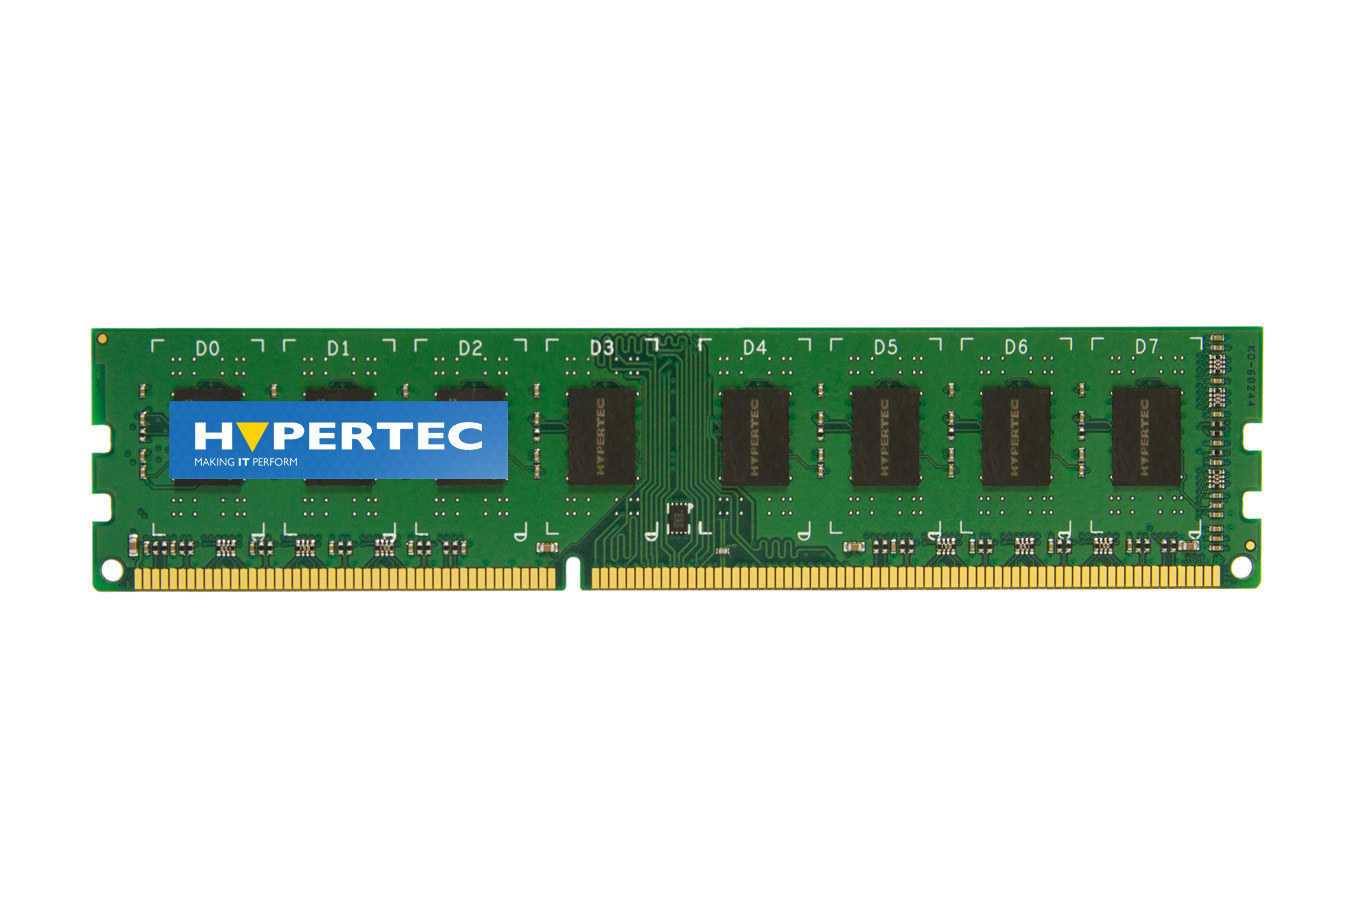 G865R-HY HYPERTEC A Dell equivalent 4 GB Non-ECC DDR3 SDRAM 1333 Mhz Legacy from Hypertec